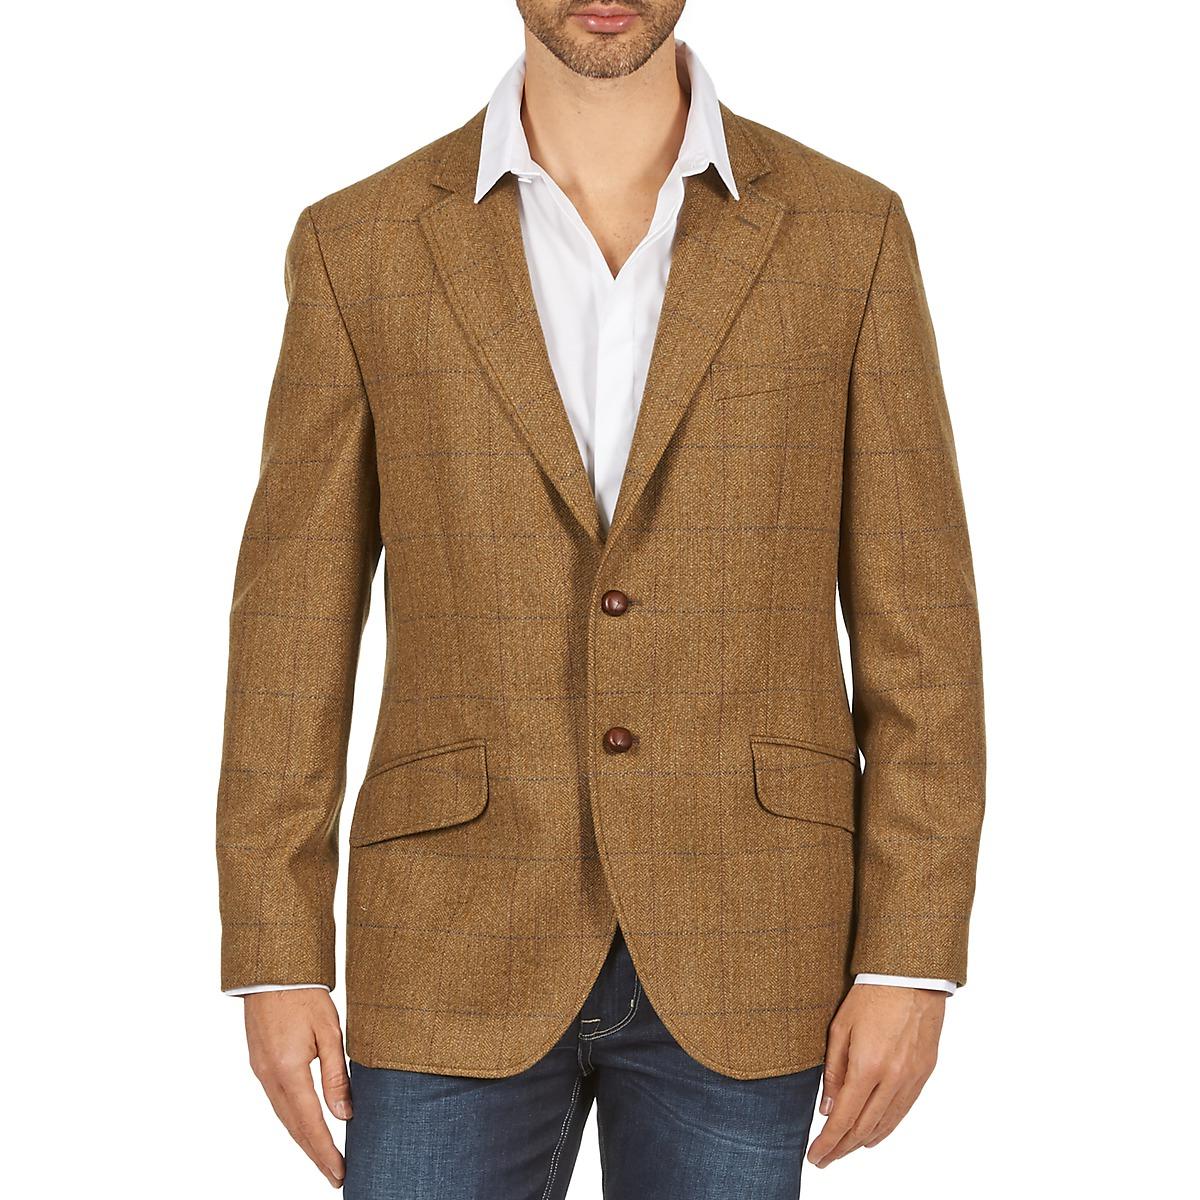 Hackett Tweed Wpane Jacket in Brown for Men - Save 13% - Lyst